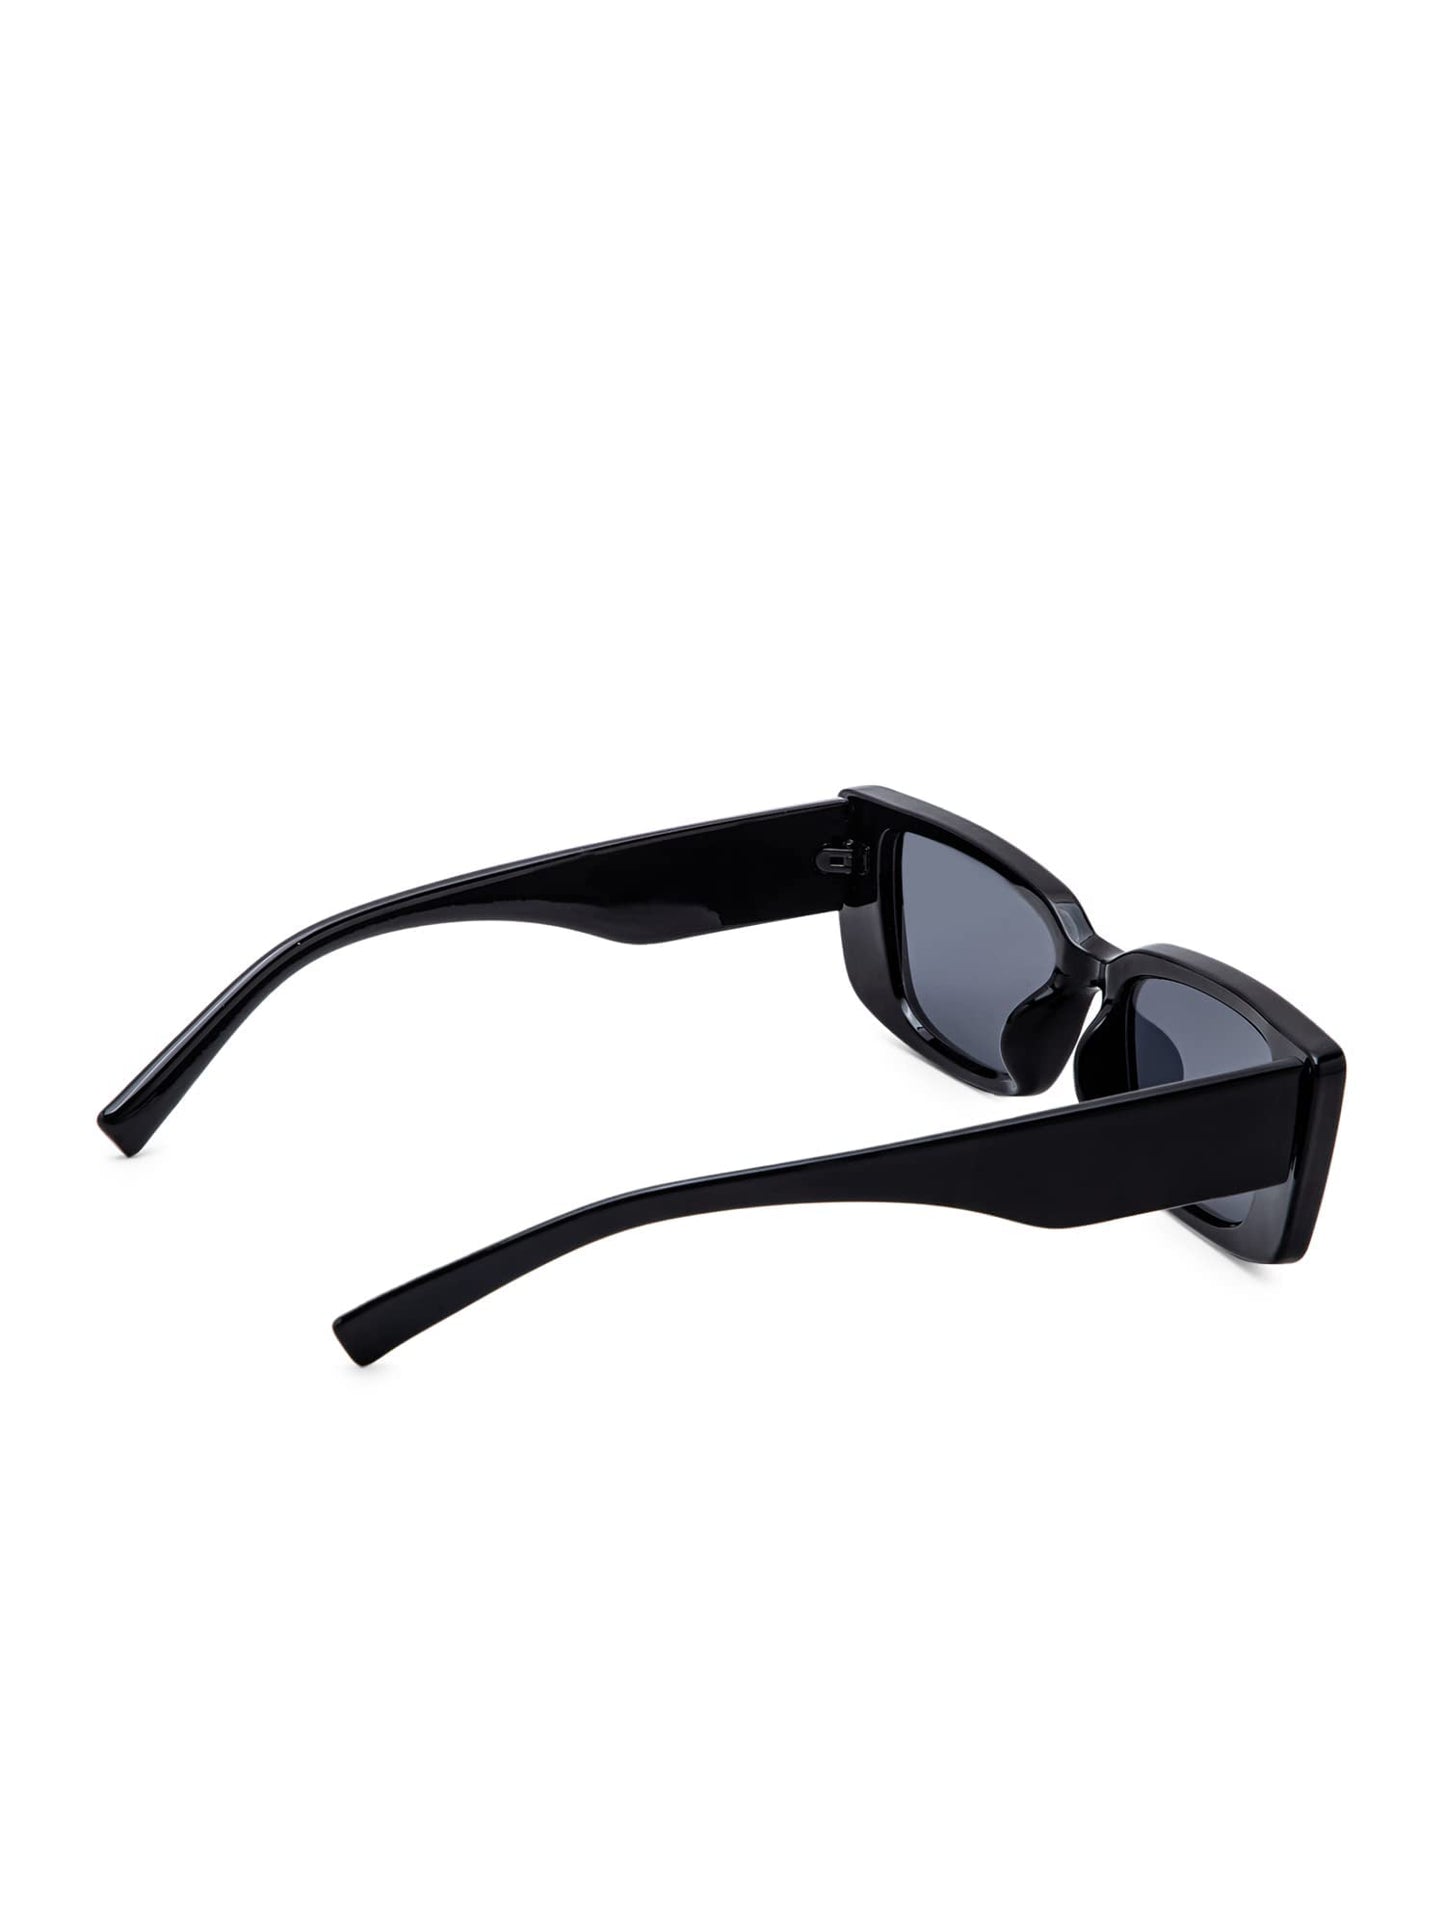 Intellilens  Branded Latest and Stylish Sunglasses  100 UV Protected  Light Weight Durable Premium Looks  Women  Black Lenses  Kendall Jenner Sunglasses  Medium